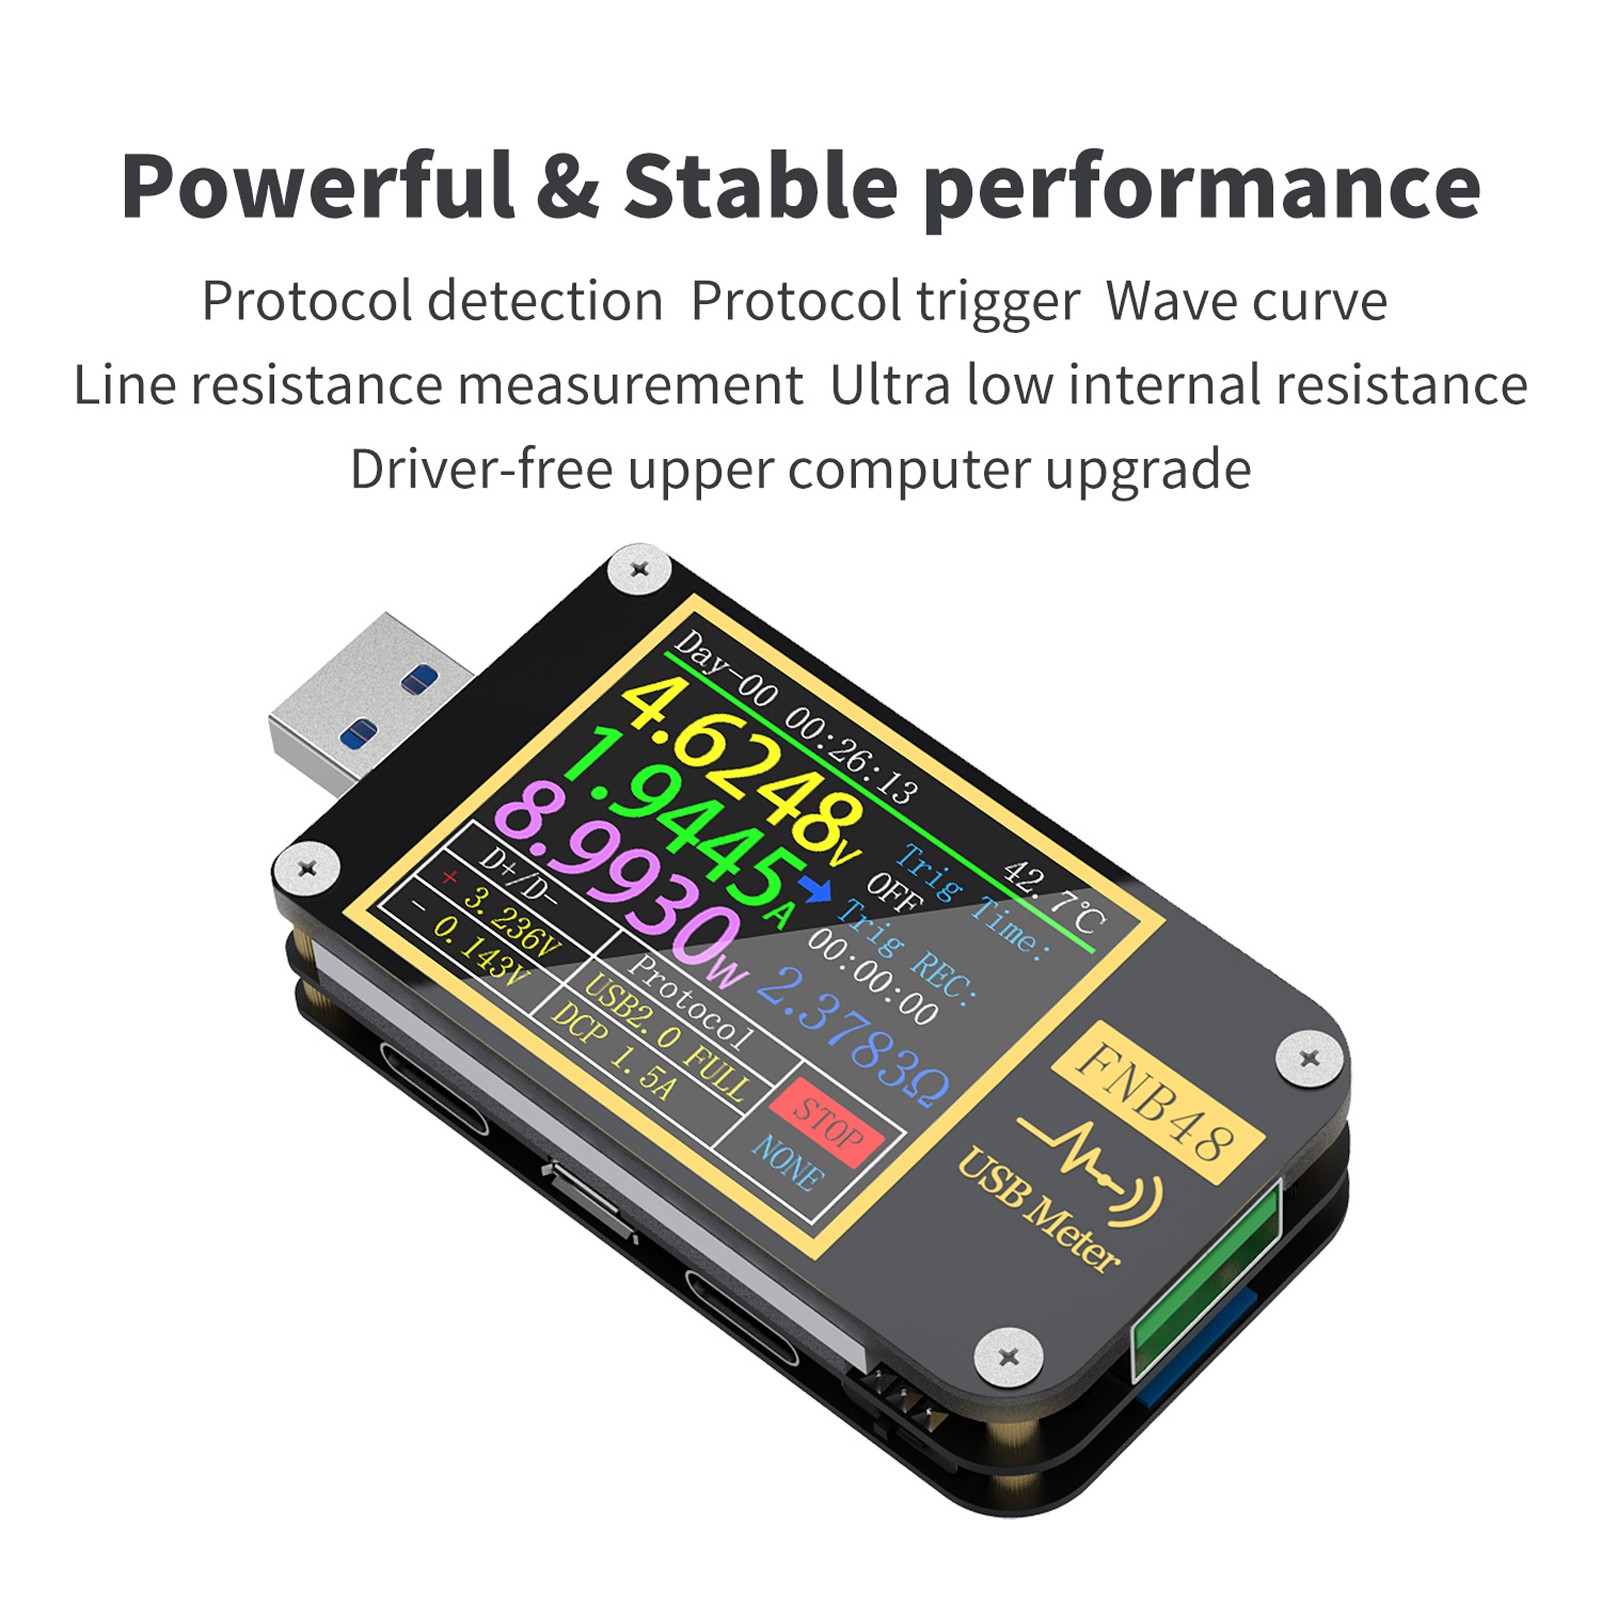 FNIRSI-FNB48 Voltmeter Ammeter Current & Voltmeter USB Tester QC/PD Fast Charging Protocol Capacity Tester With 9 Languange